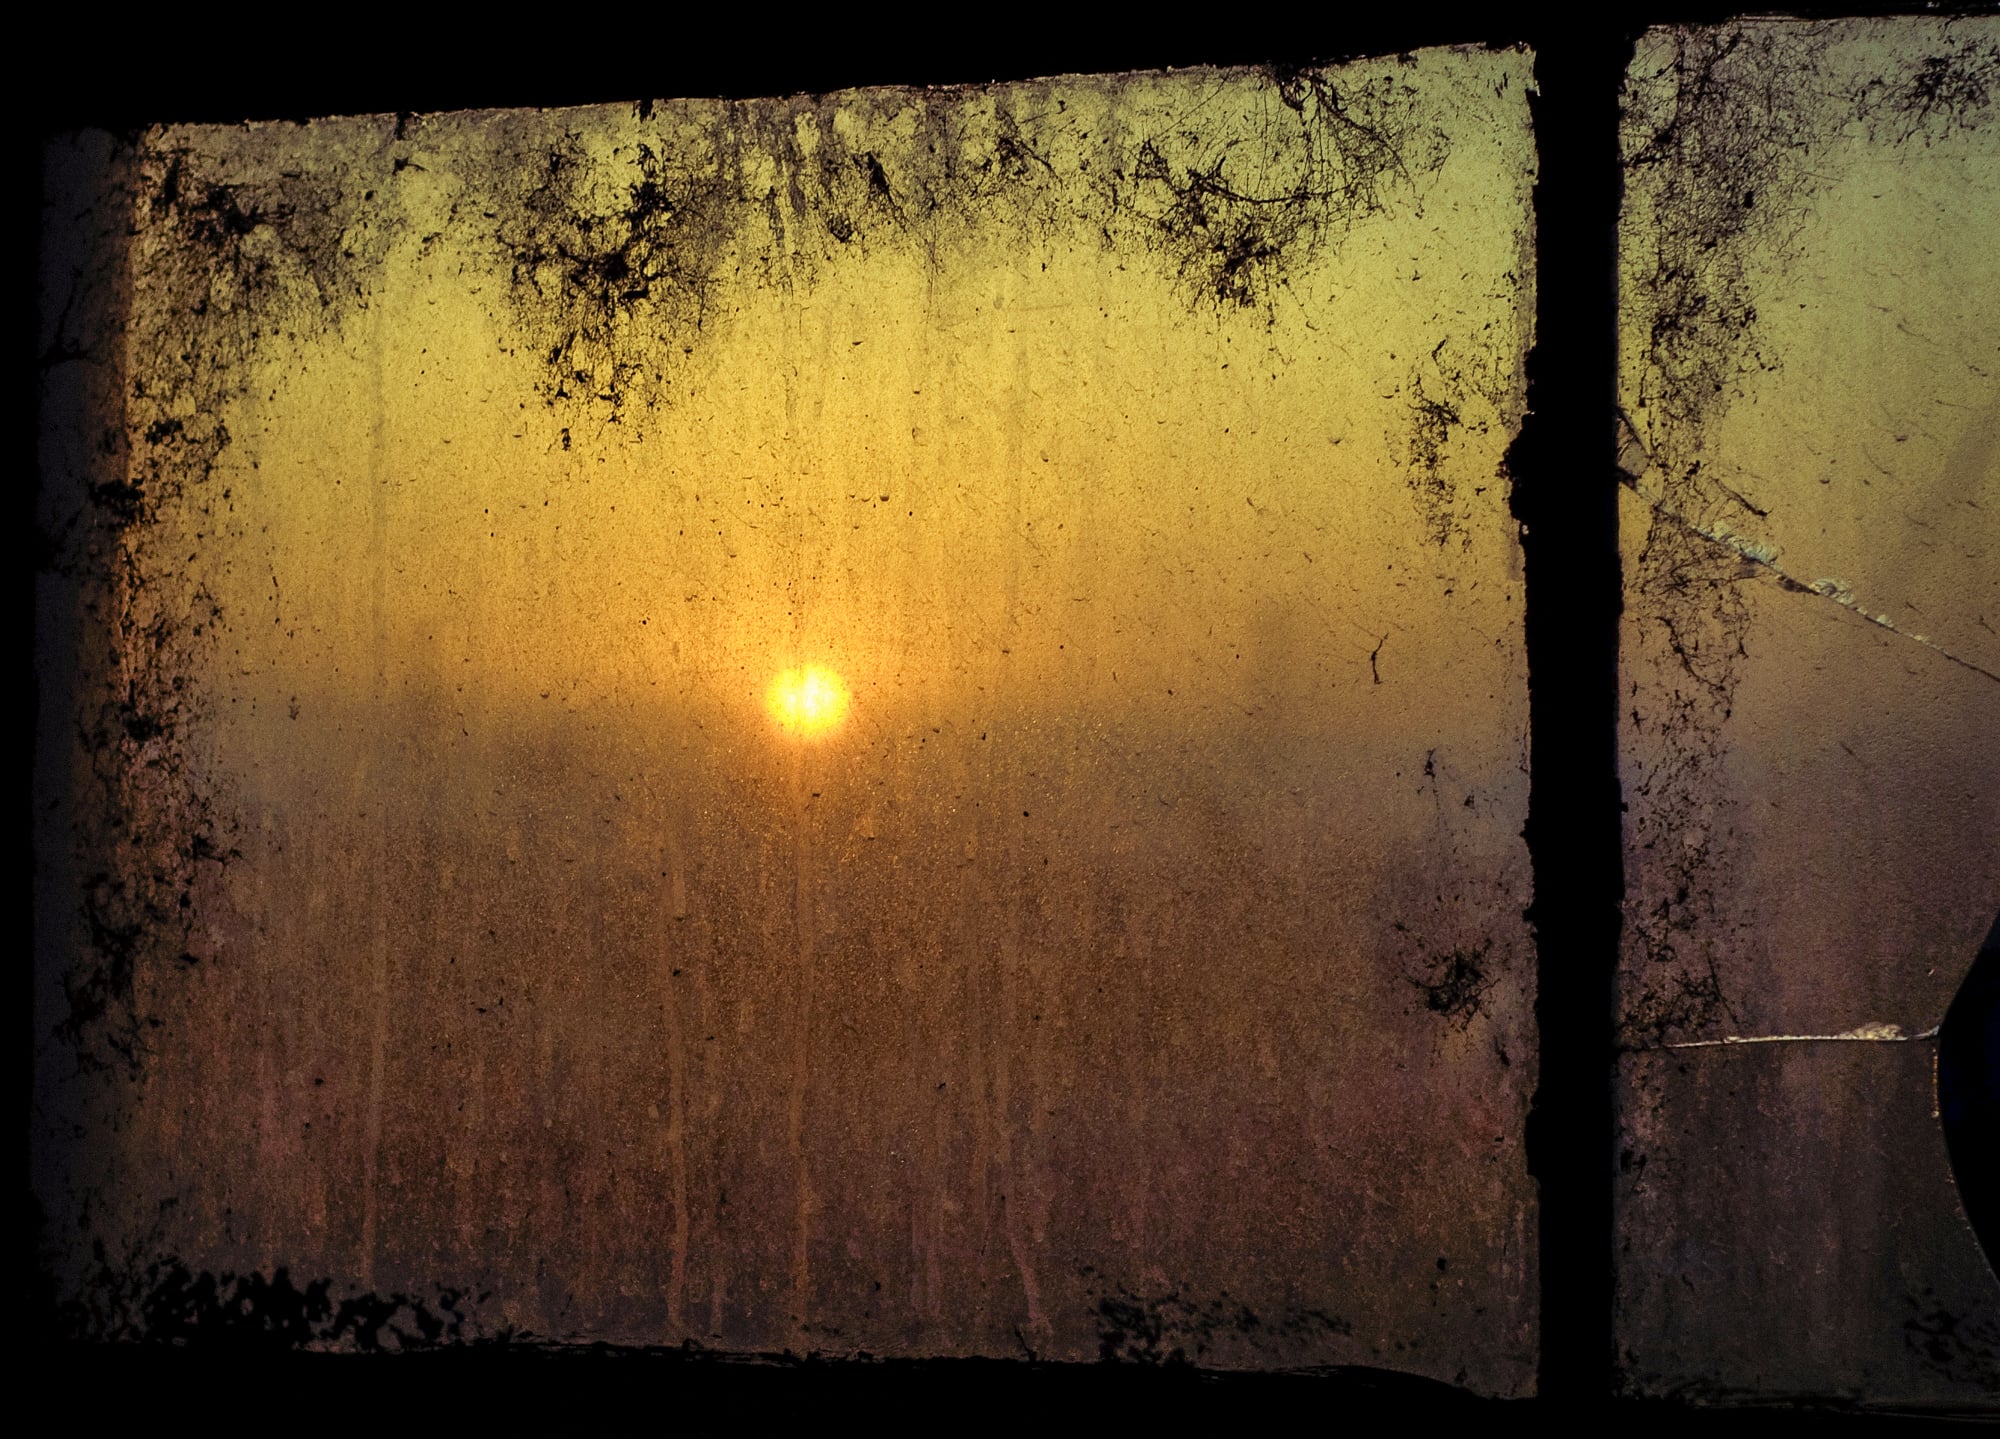 Sunrise through and dirty window